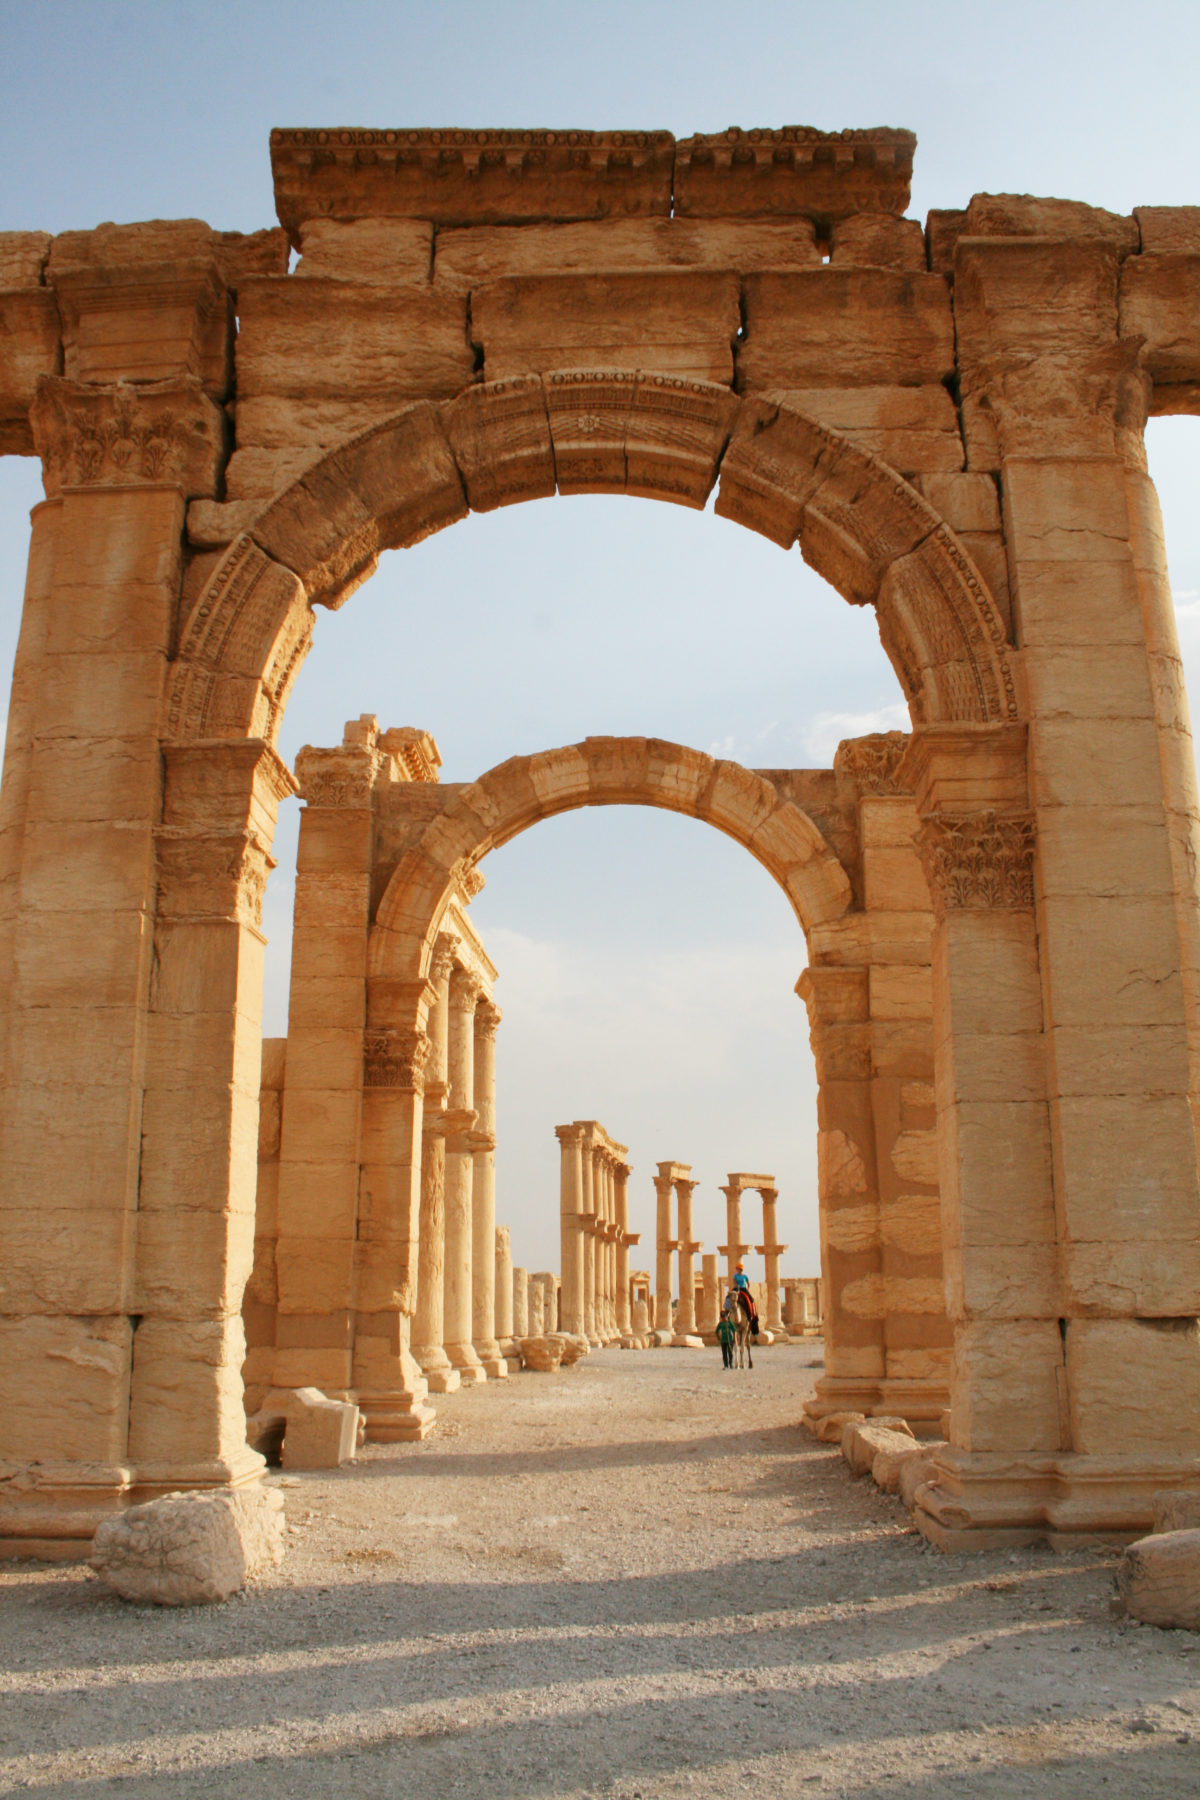 Walk through the desert oasis “Palmyra ruins” before the civil war in Syria